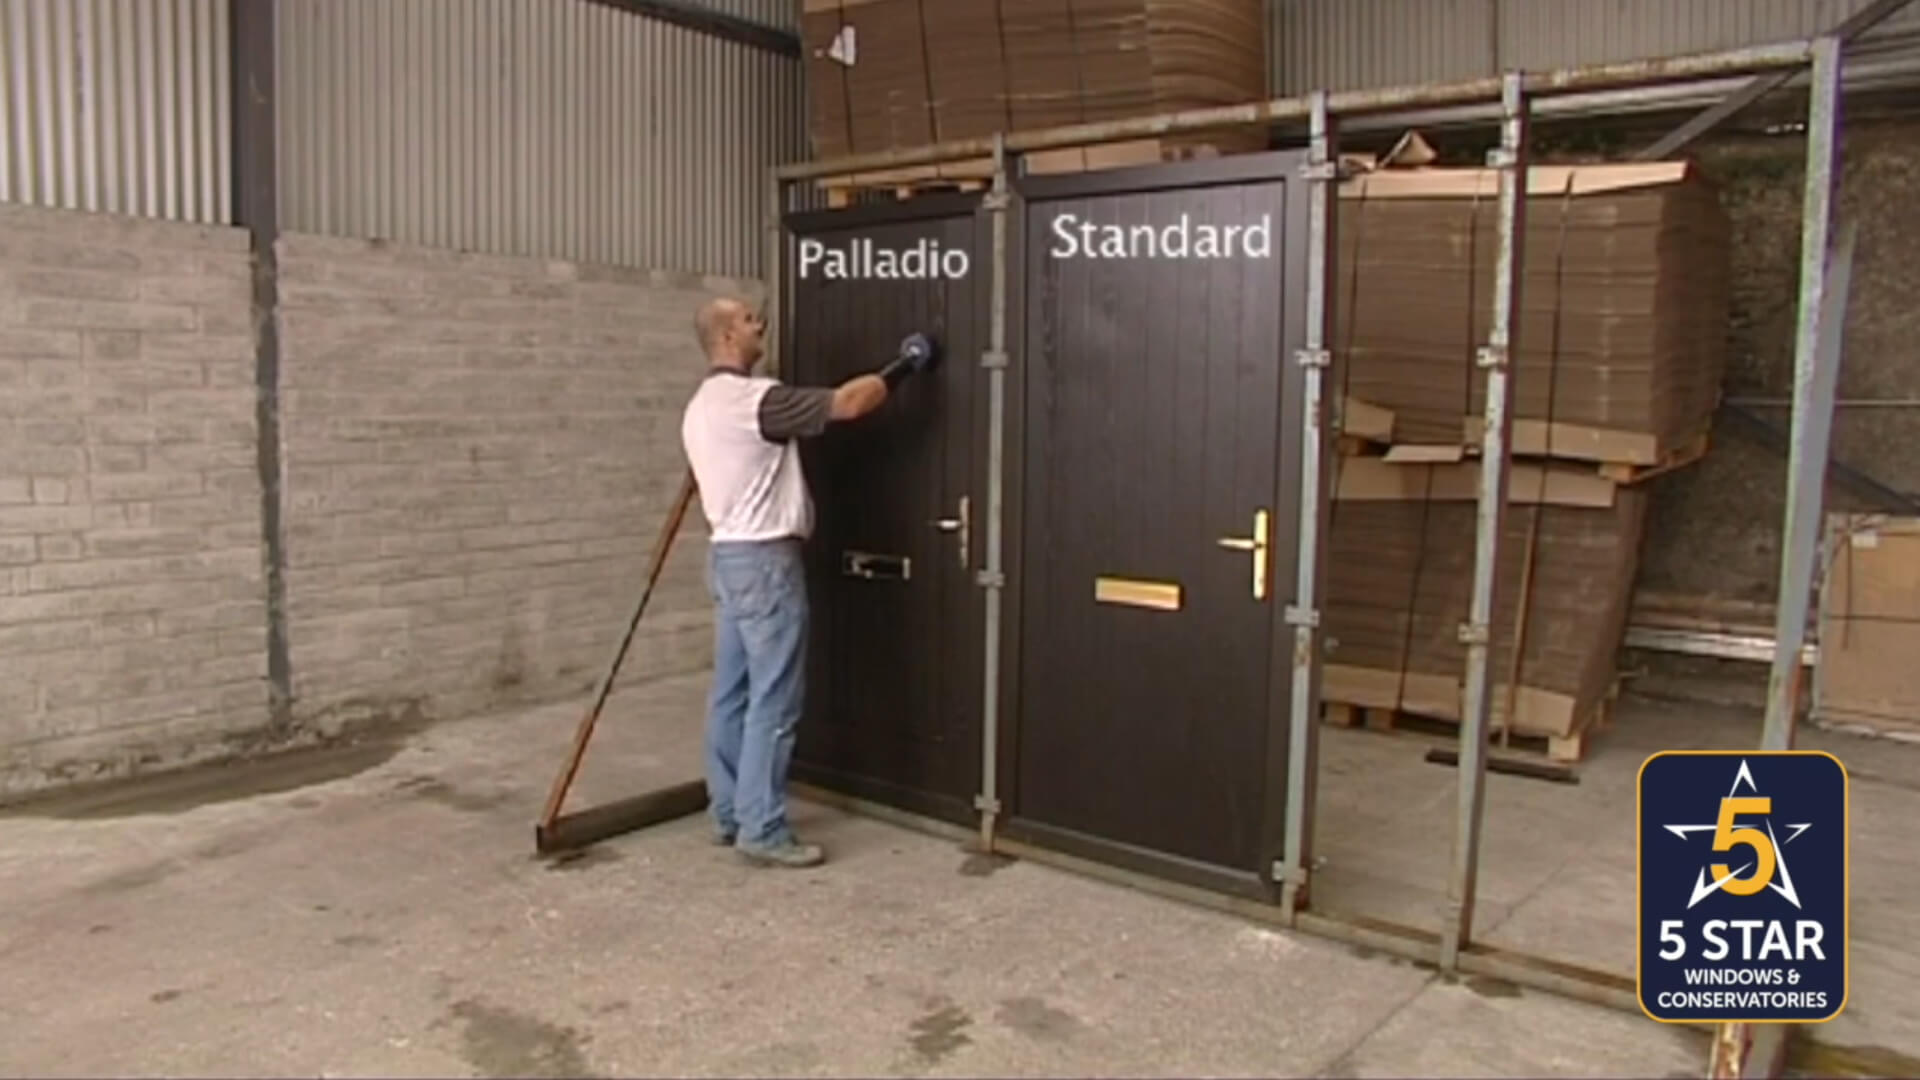 Palladio Video ready to play of man testing door